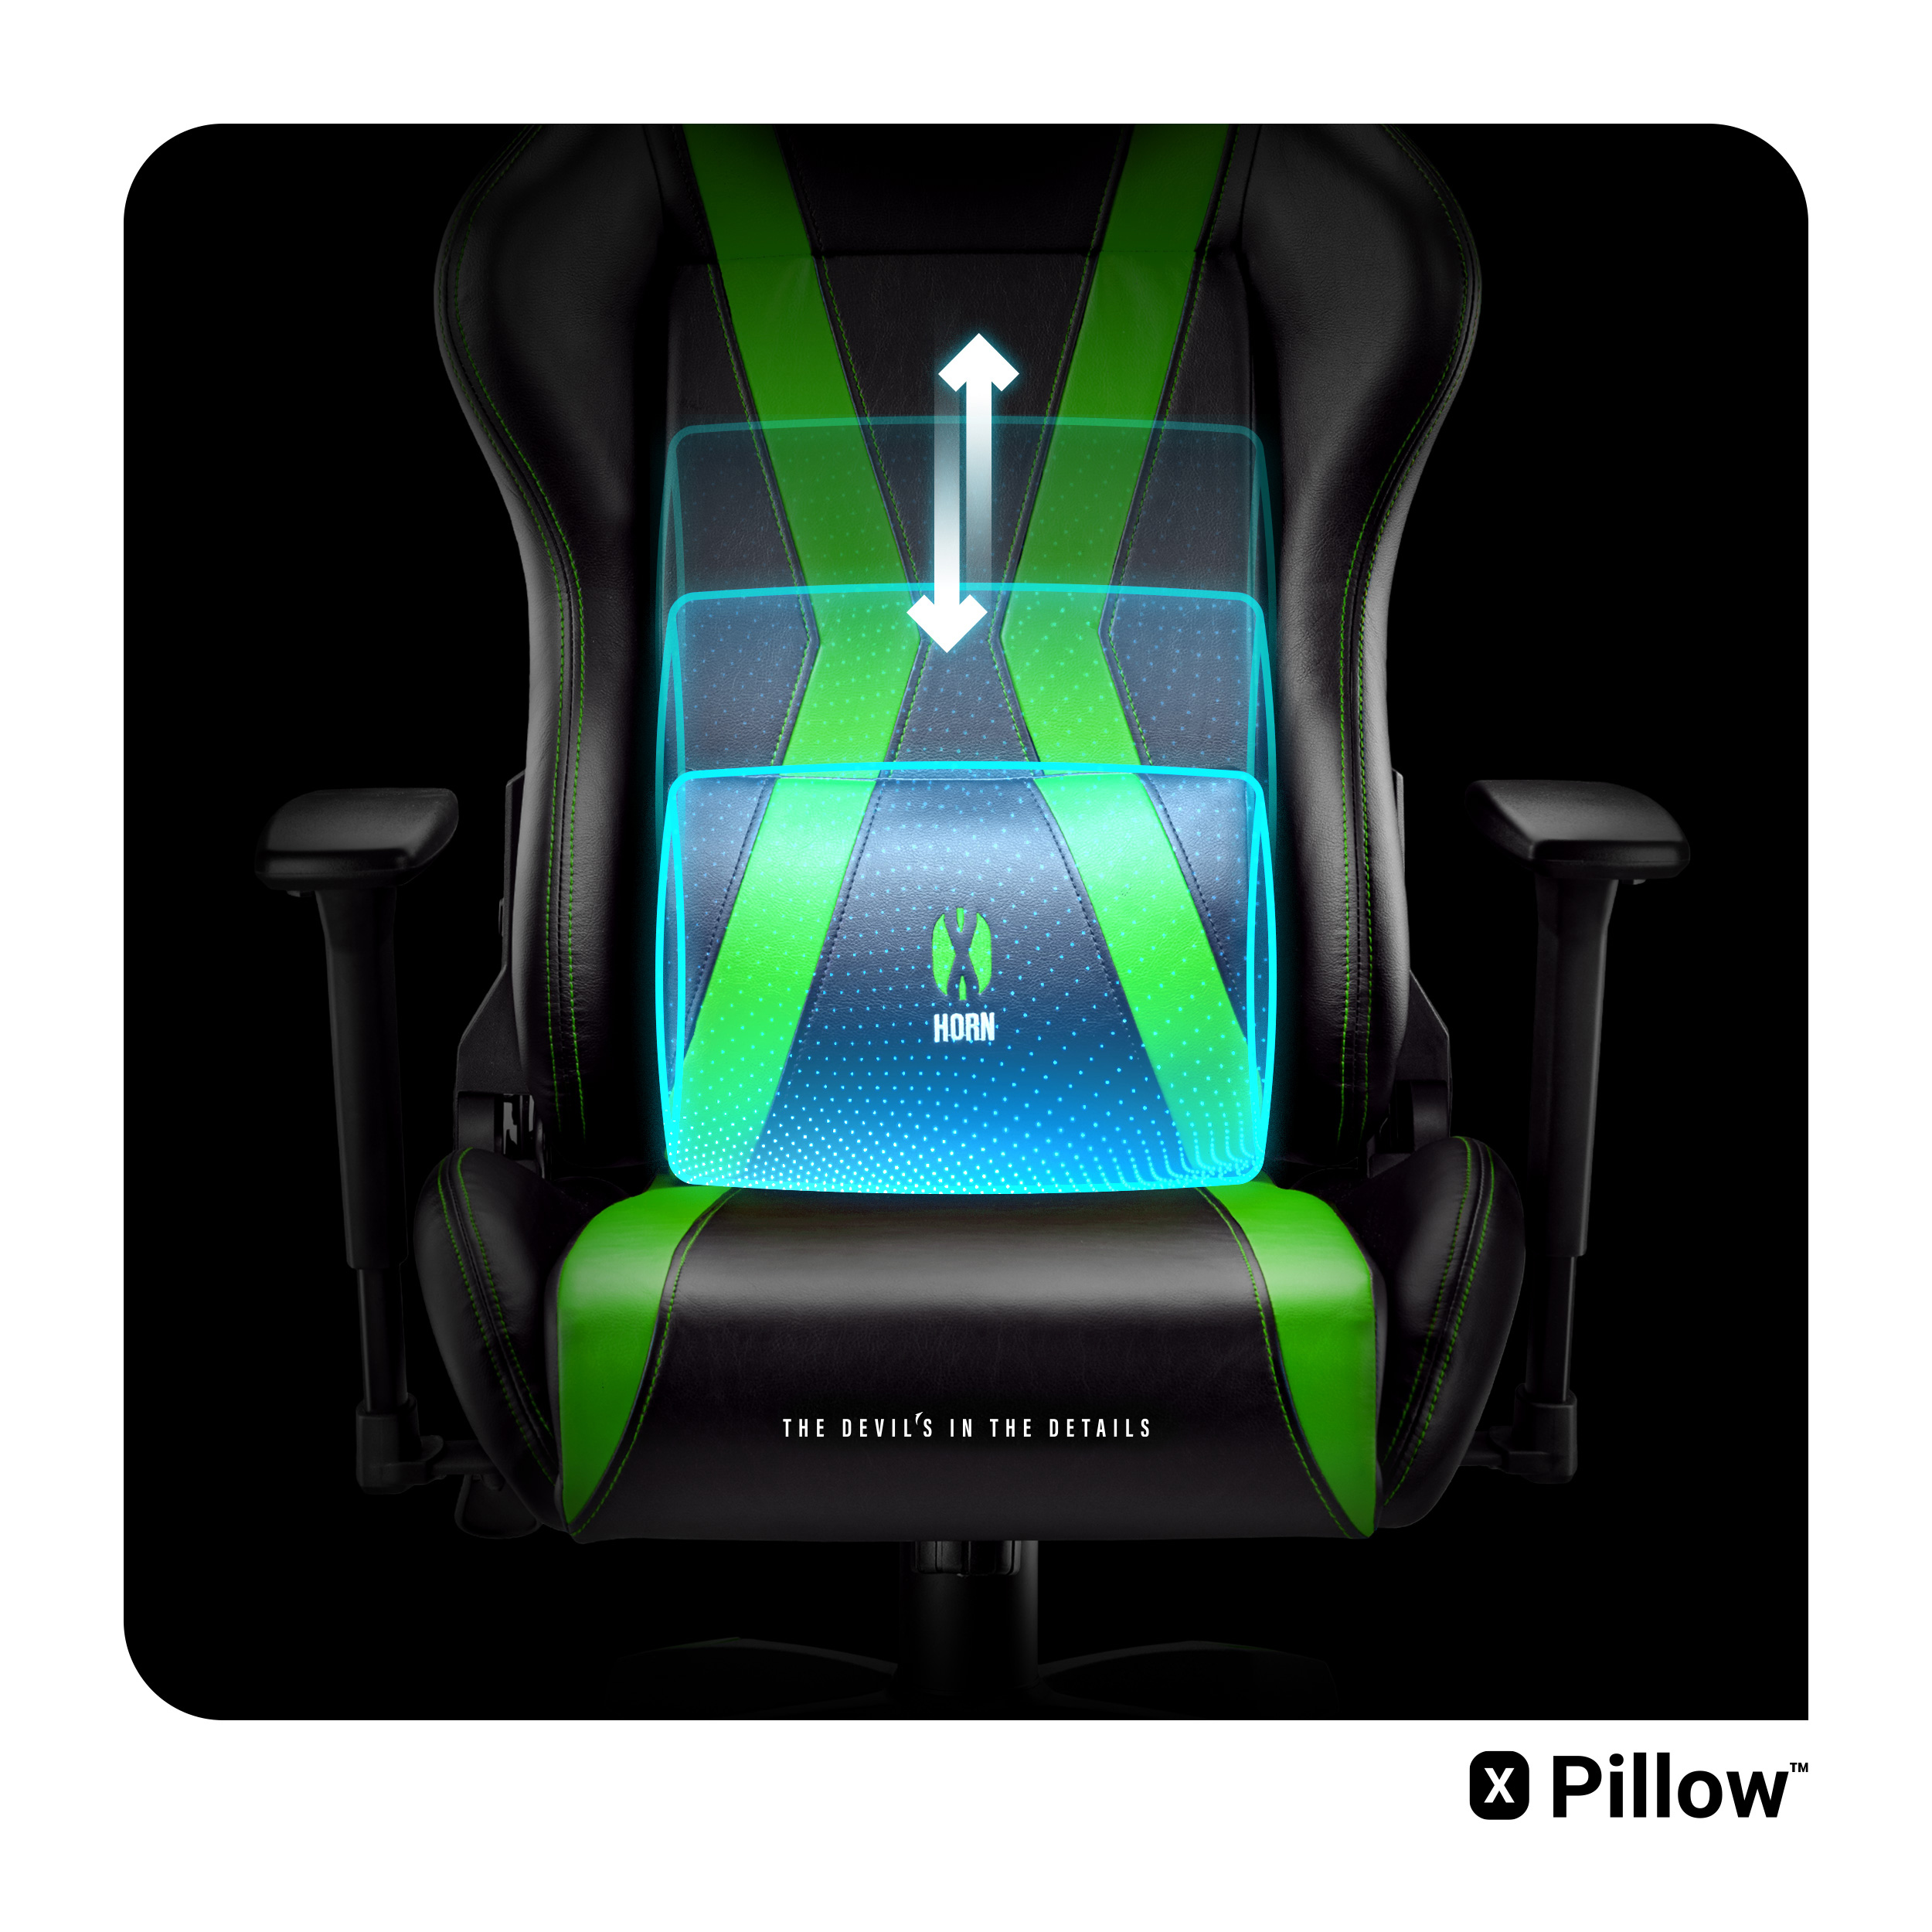 DIABLO CHAIRS GAMING STUHL X-HORN black/green 2.0 NORMAL Gaming Chair